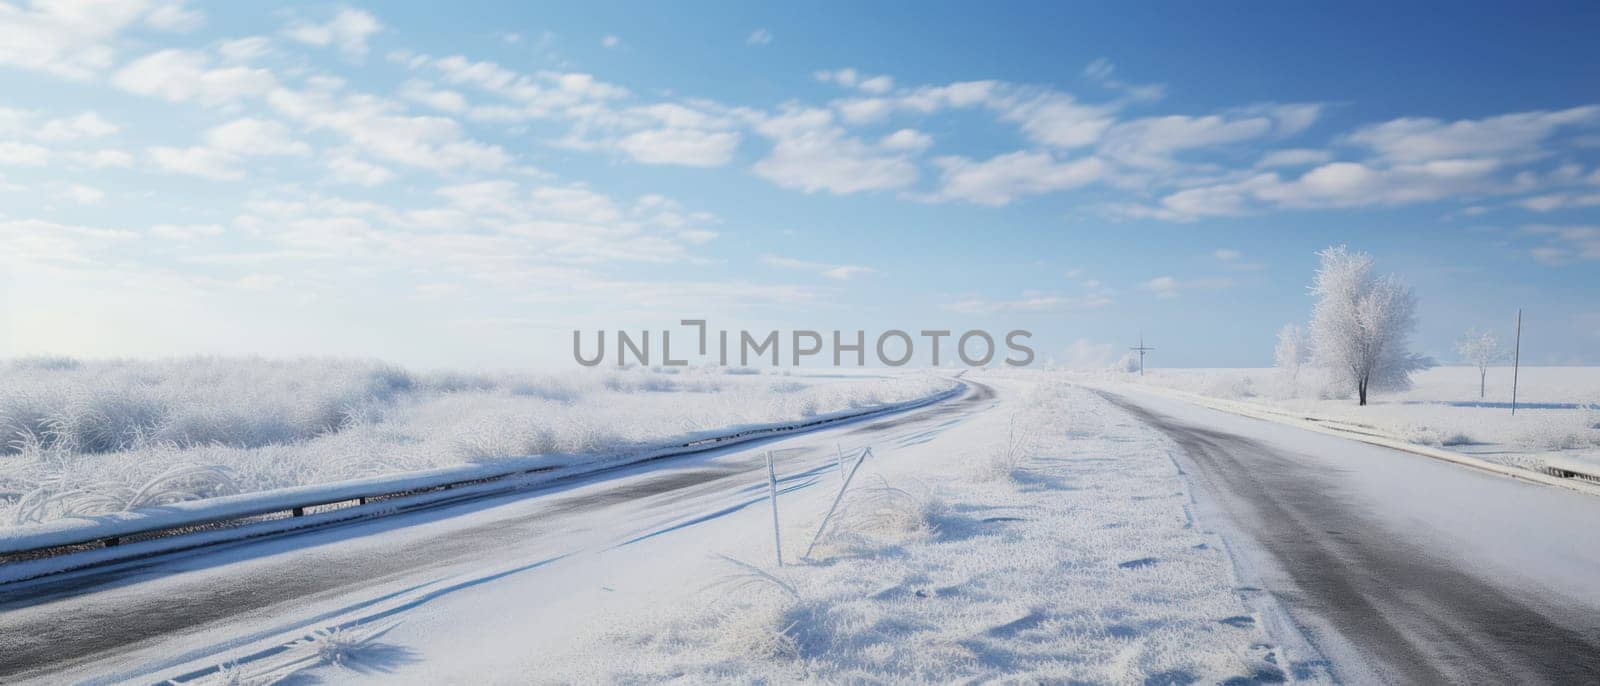 Winter Wonderland: A Serene Frozen Landscape of Snowy Tranquility. by Vichizh